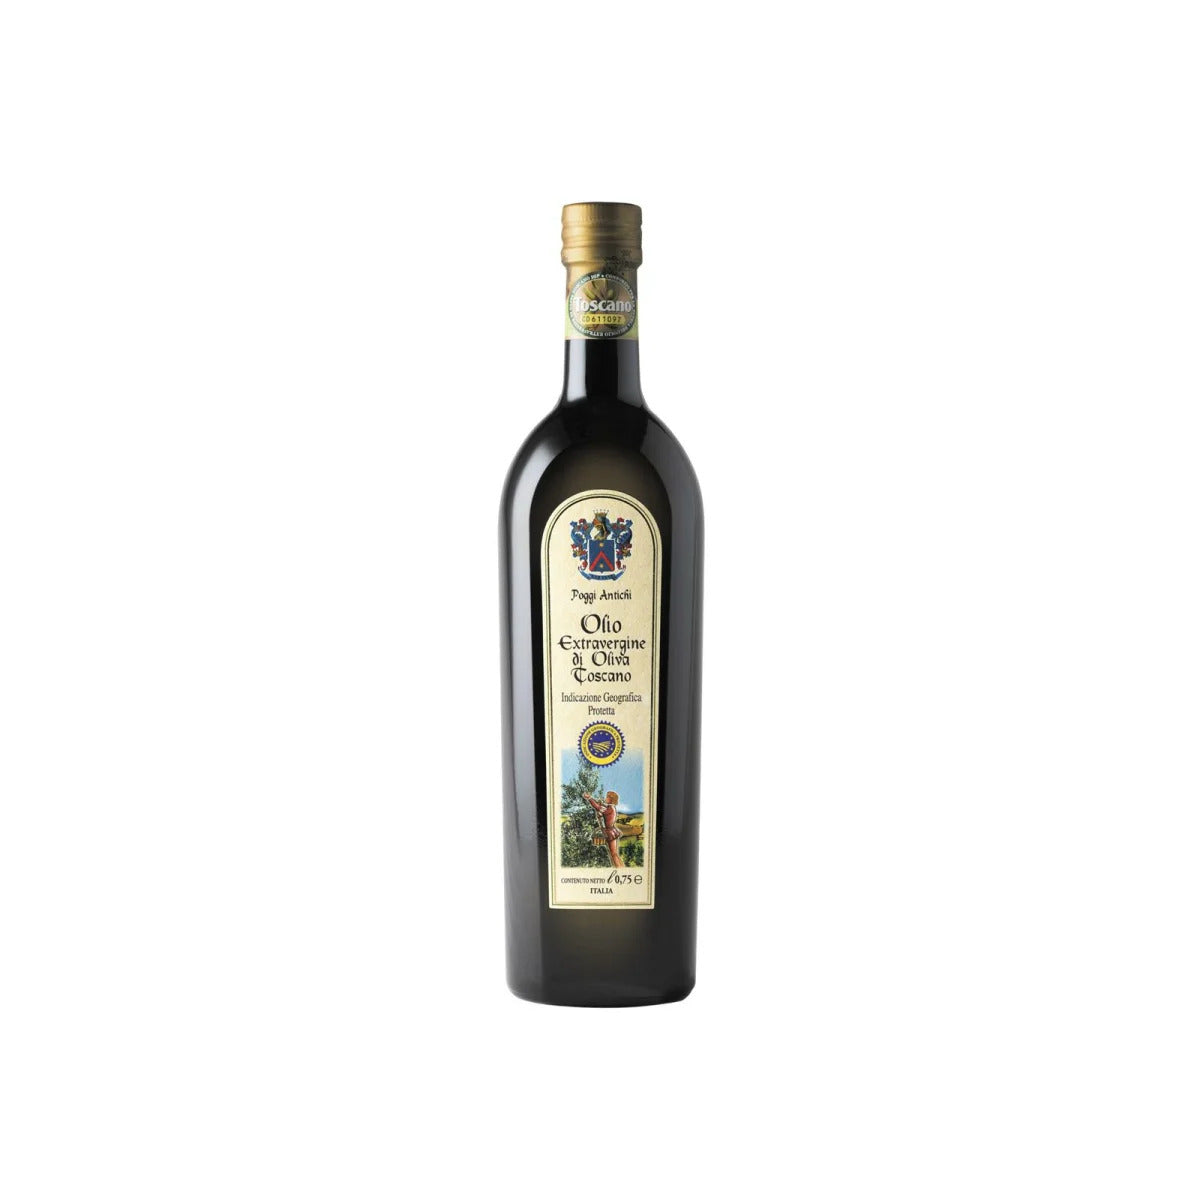 Poggi Antichi IGP Tuscan Extra Virgin Olive Oil